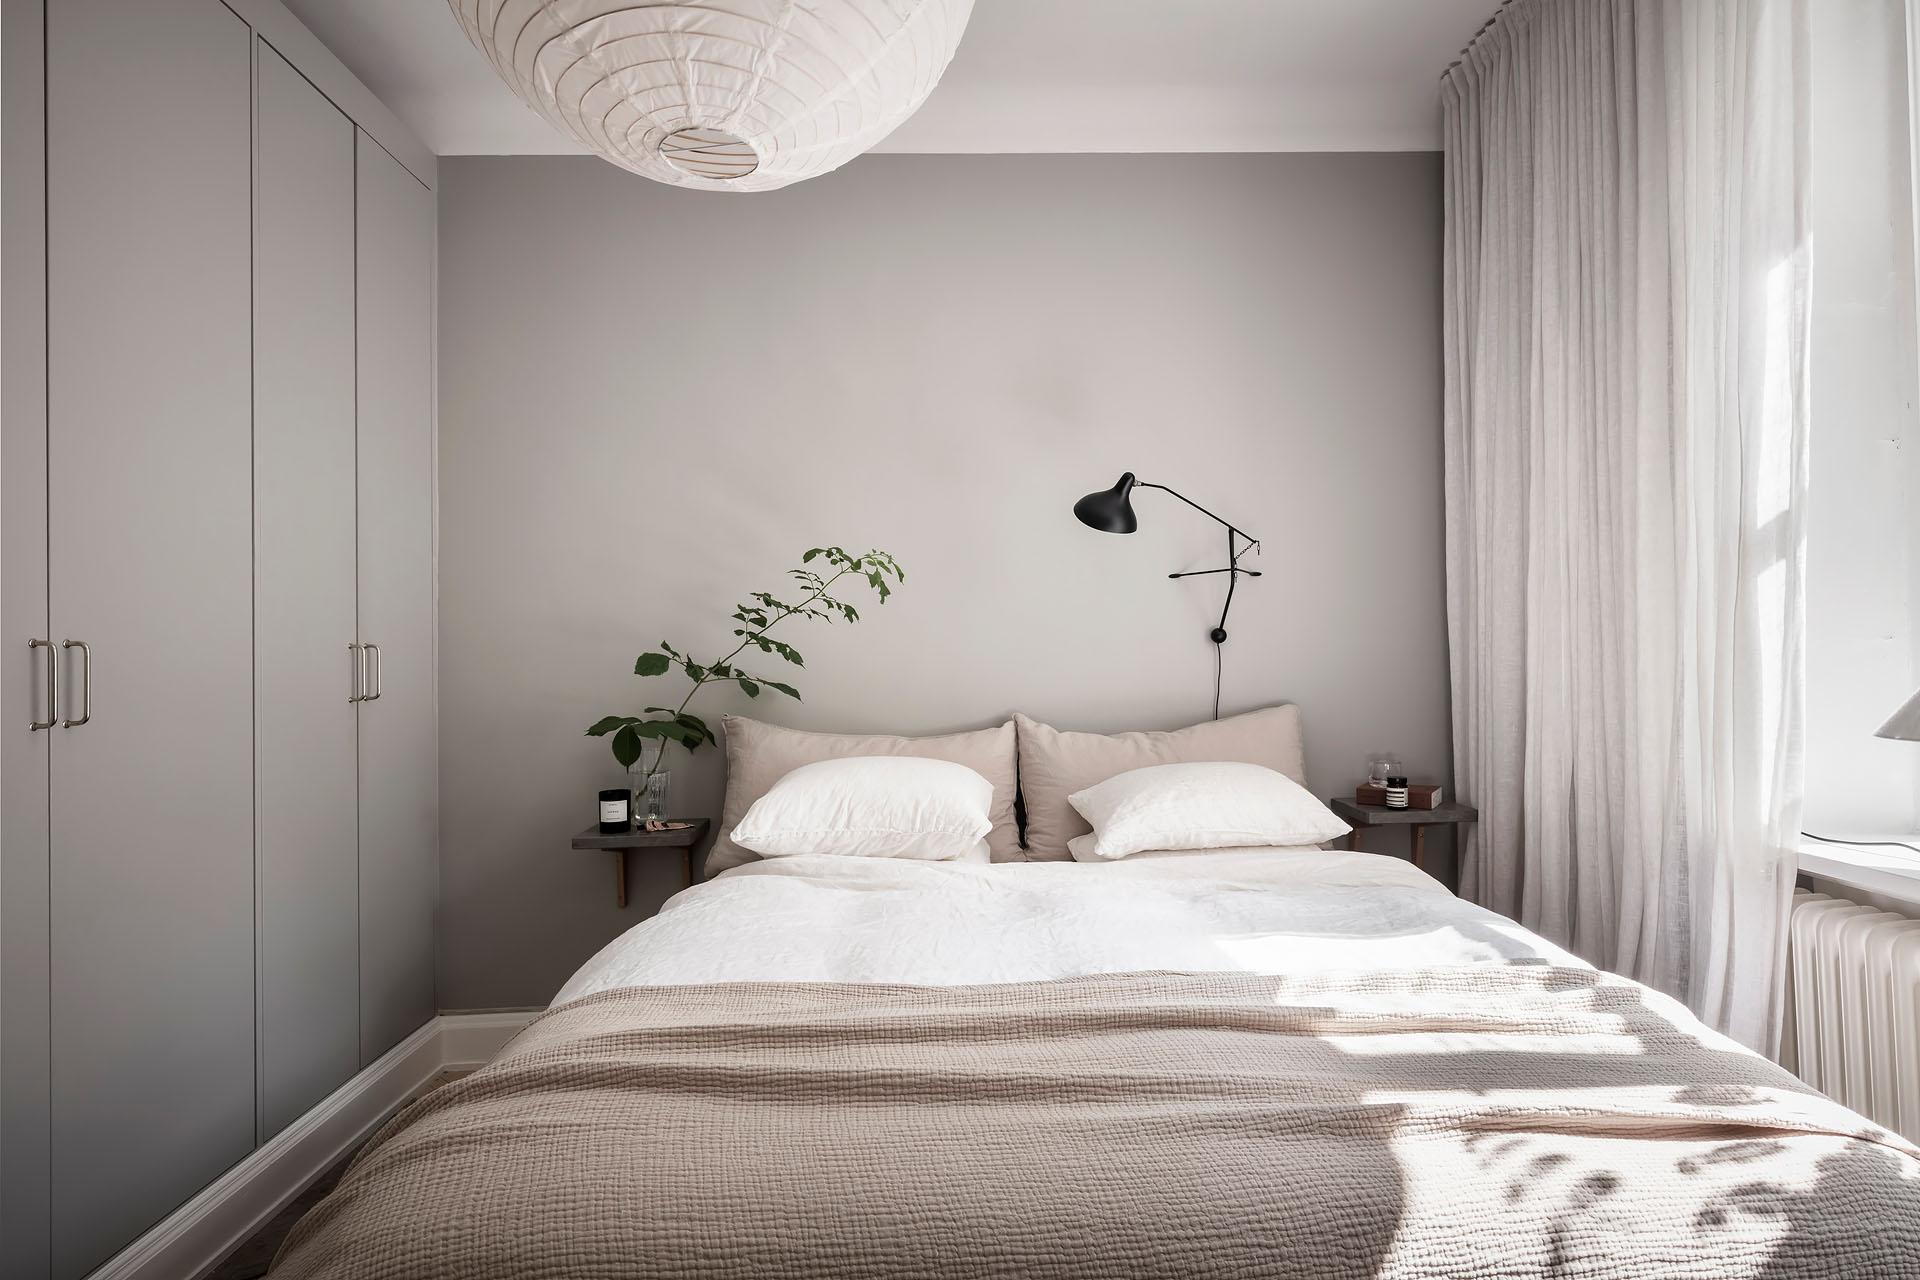 A bedroom with light grey walls, beige bedding, a light grey wardrobe, black wall lamp